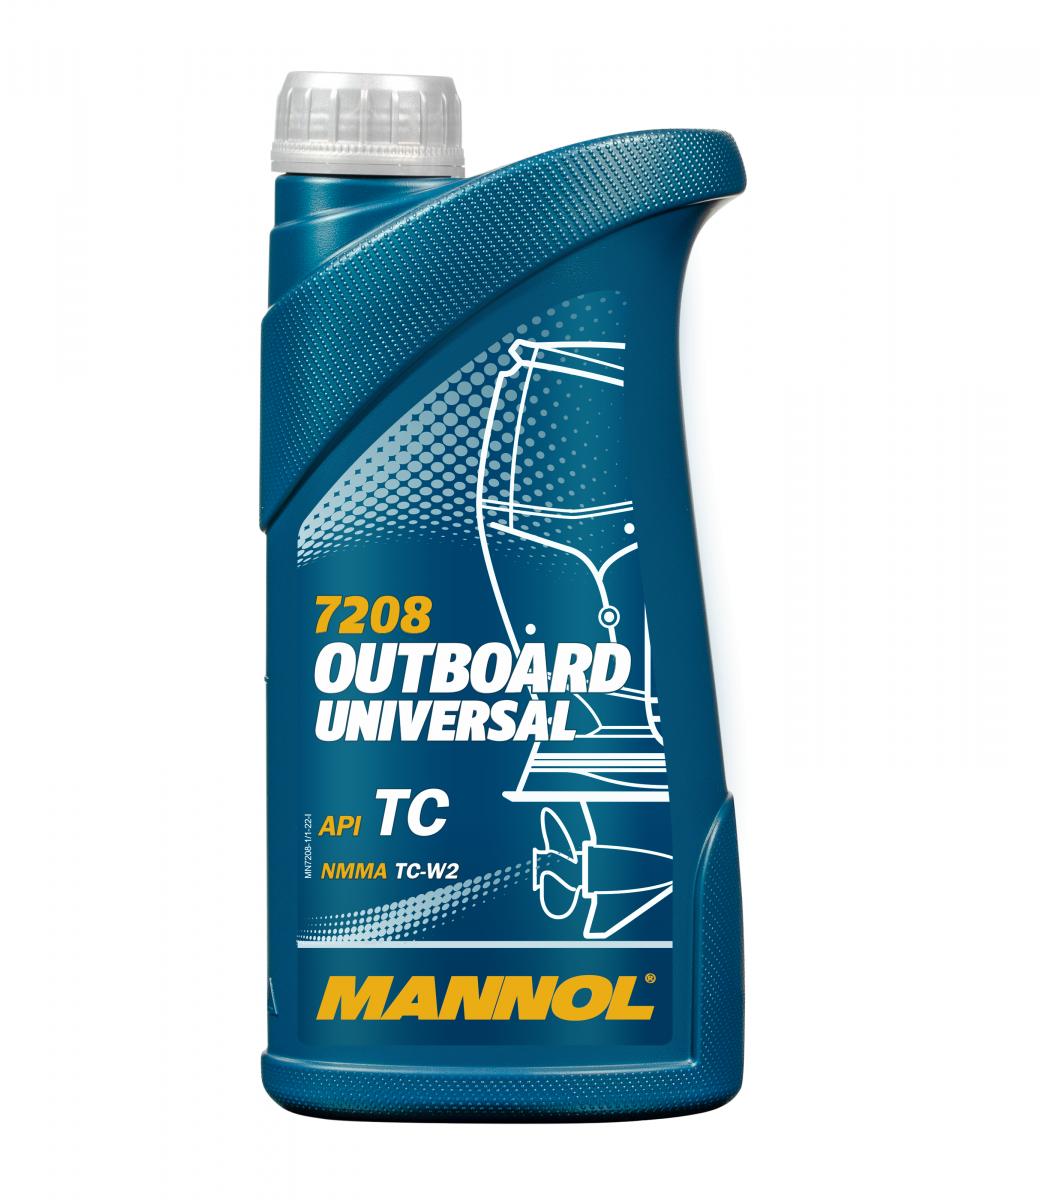 10 Liter (10x1) MANNOL Outboard Universal API TC Motoröl Außenbordmotoröl